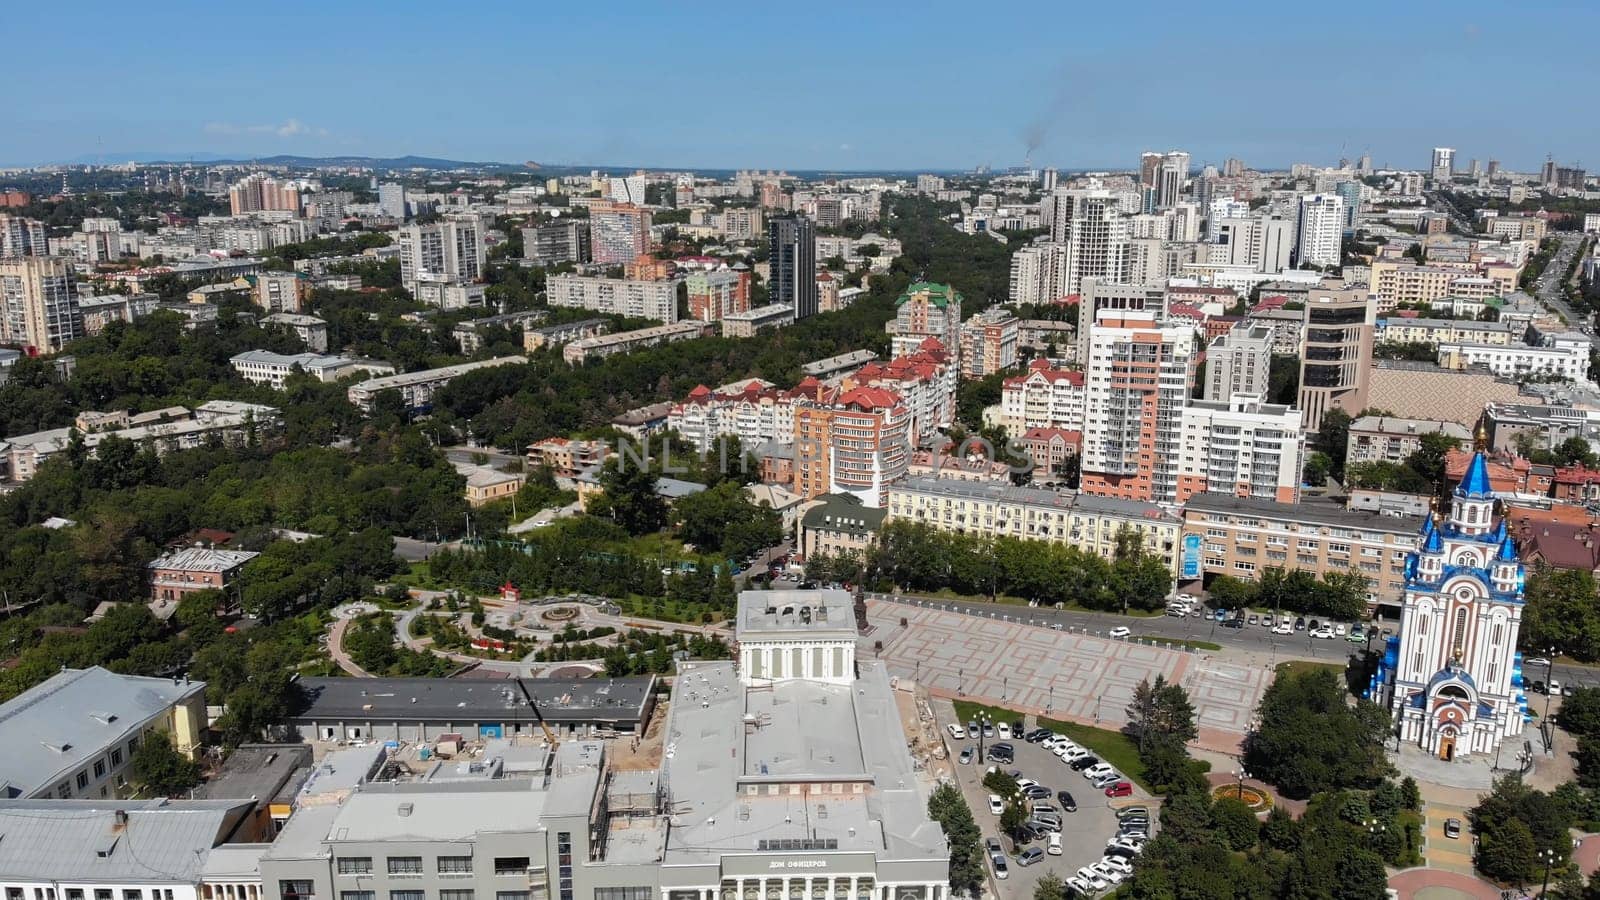 Khabarovsk city from a bird's-eye view